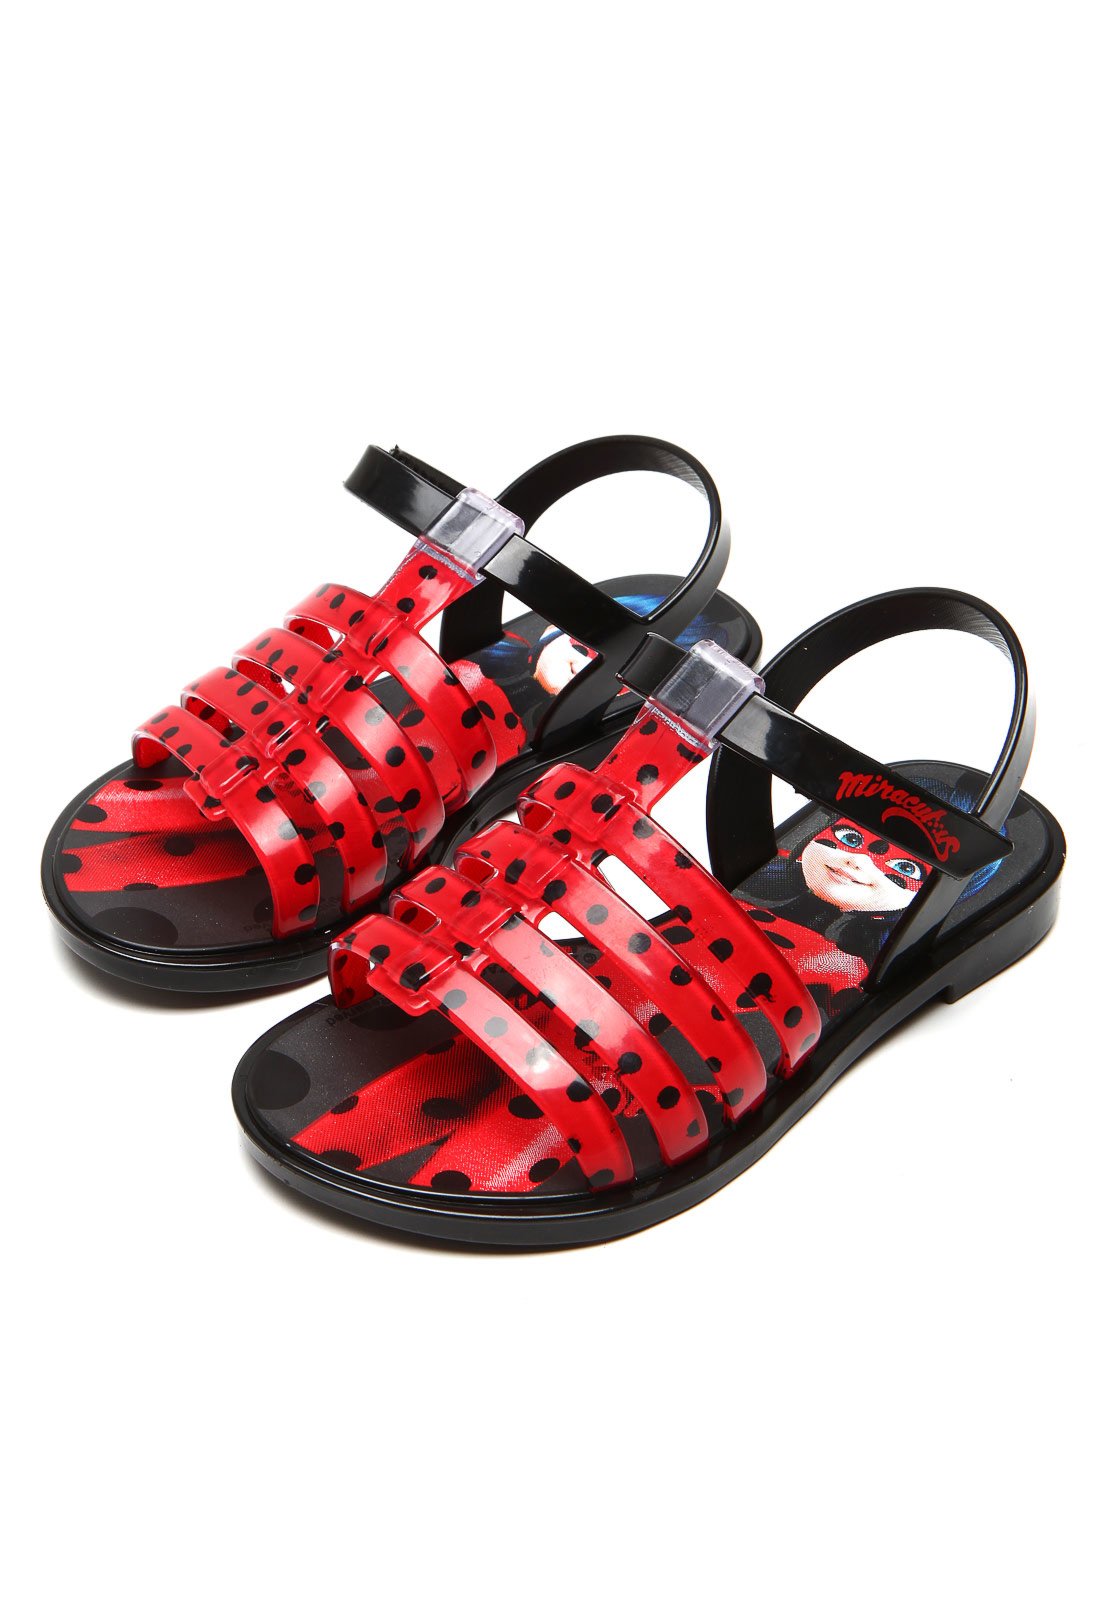 a sandália da ladybug